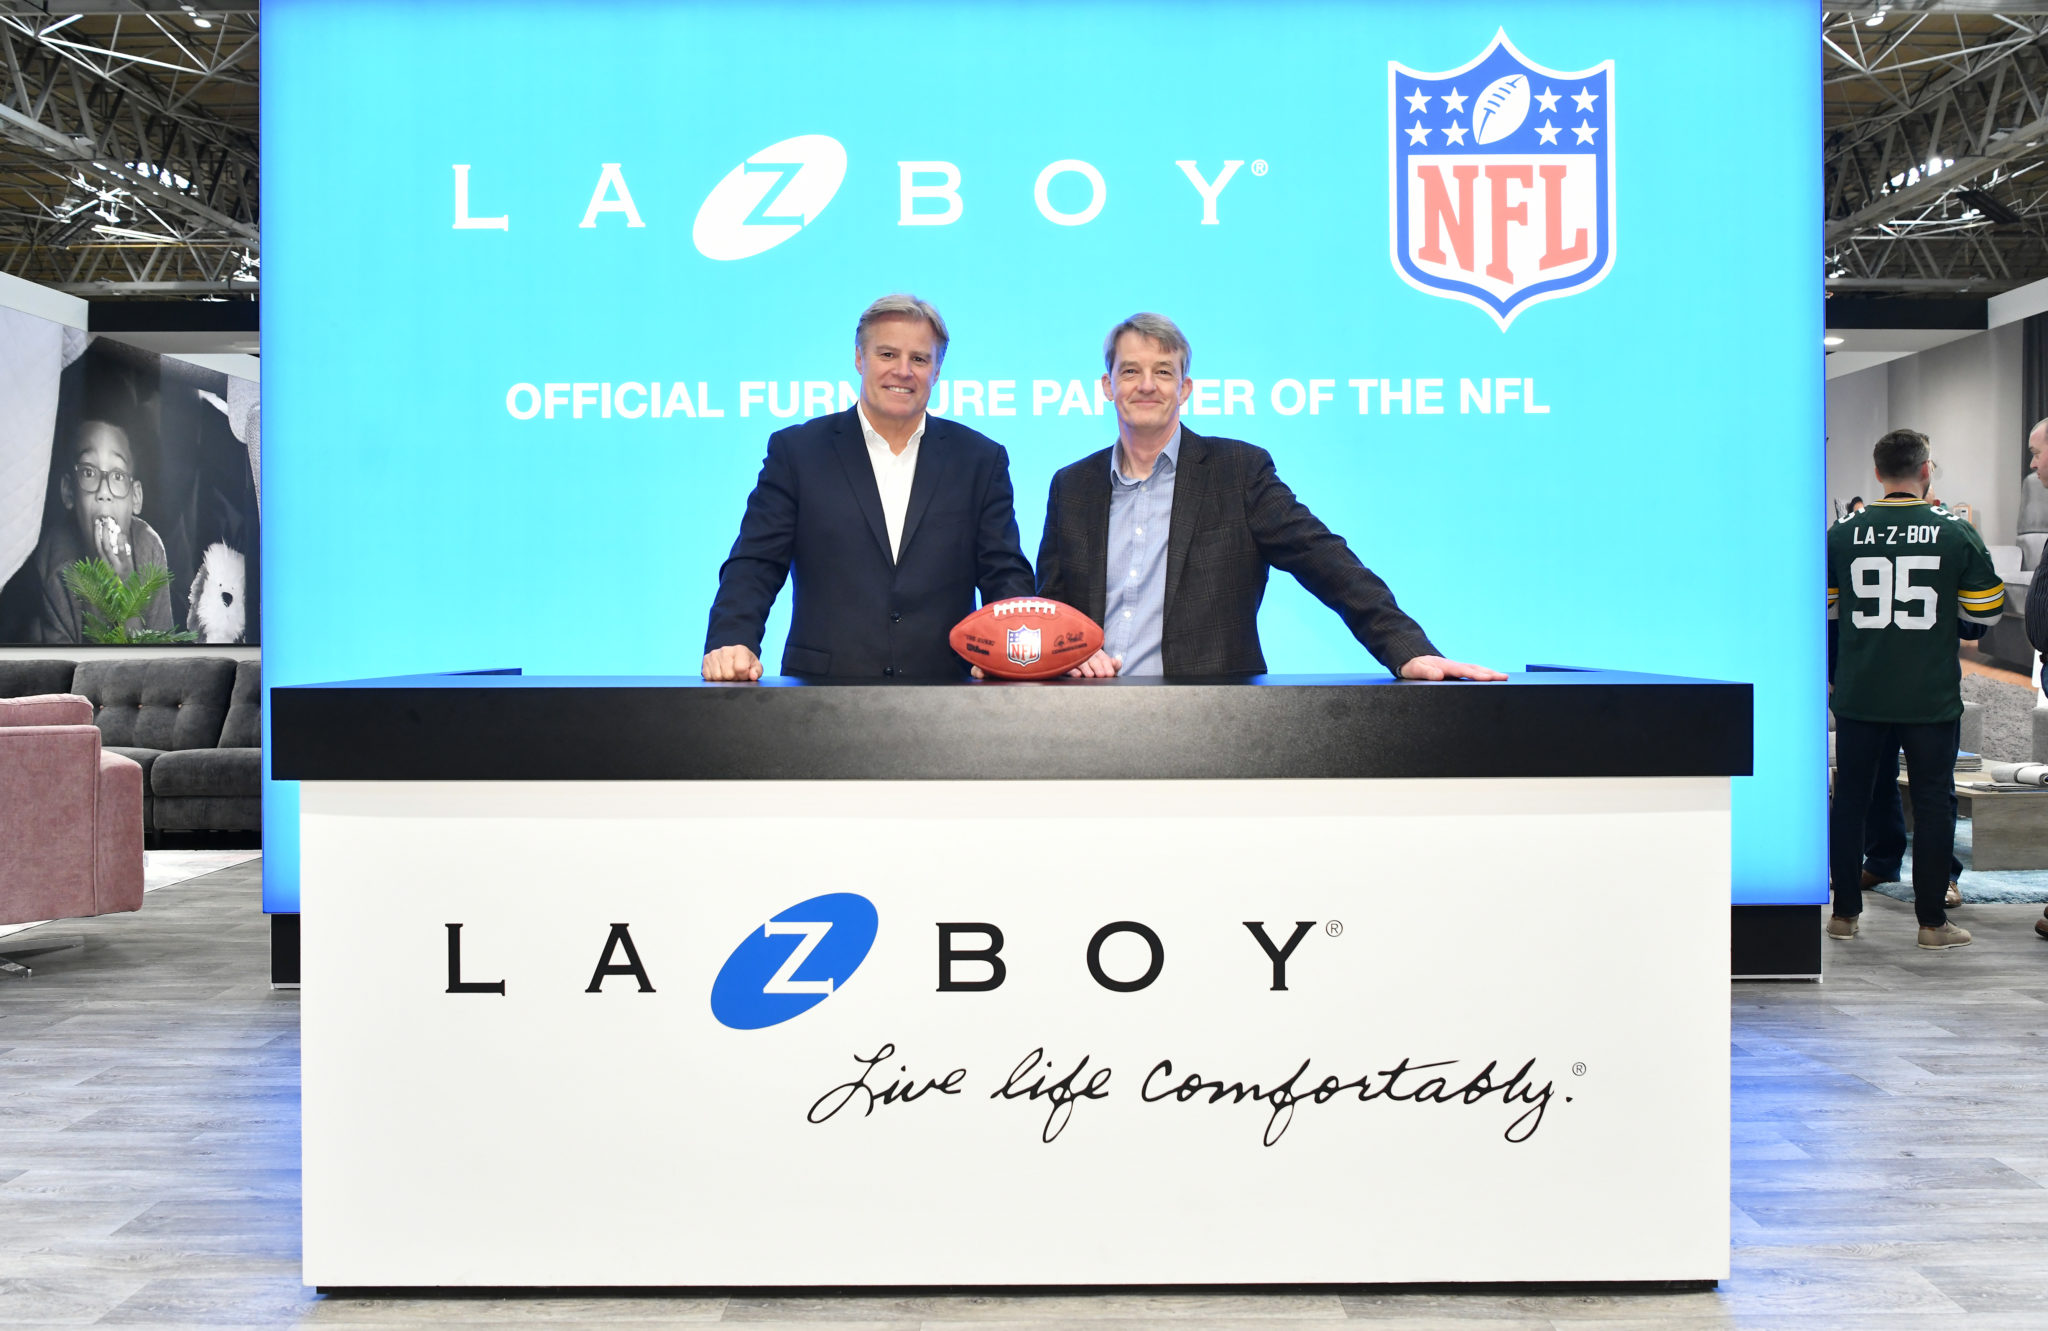 La-Z-Boy kicks off the UK and Ireland furniture partnership with NFL — sponsorship.org